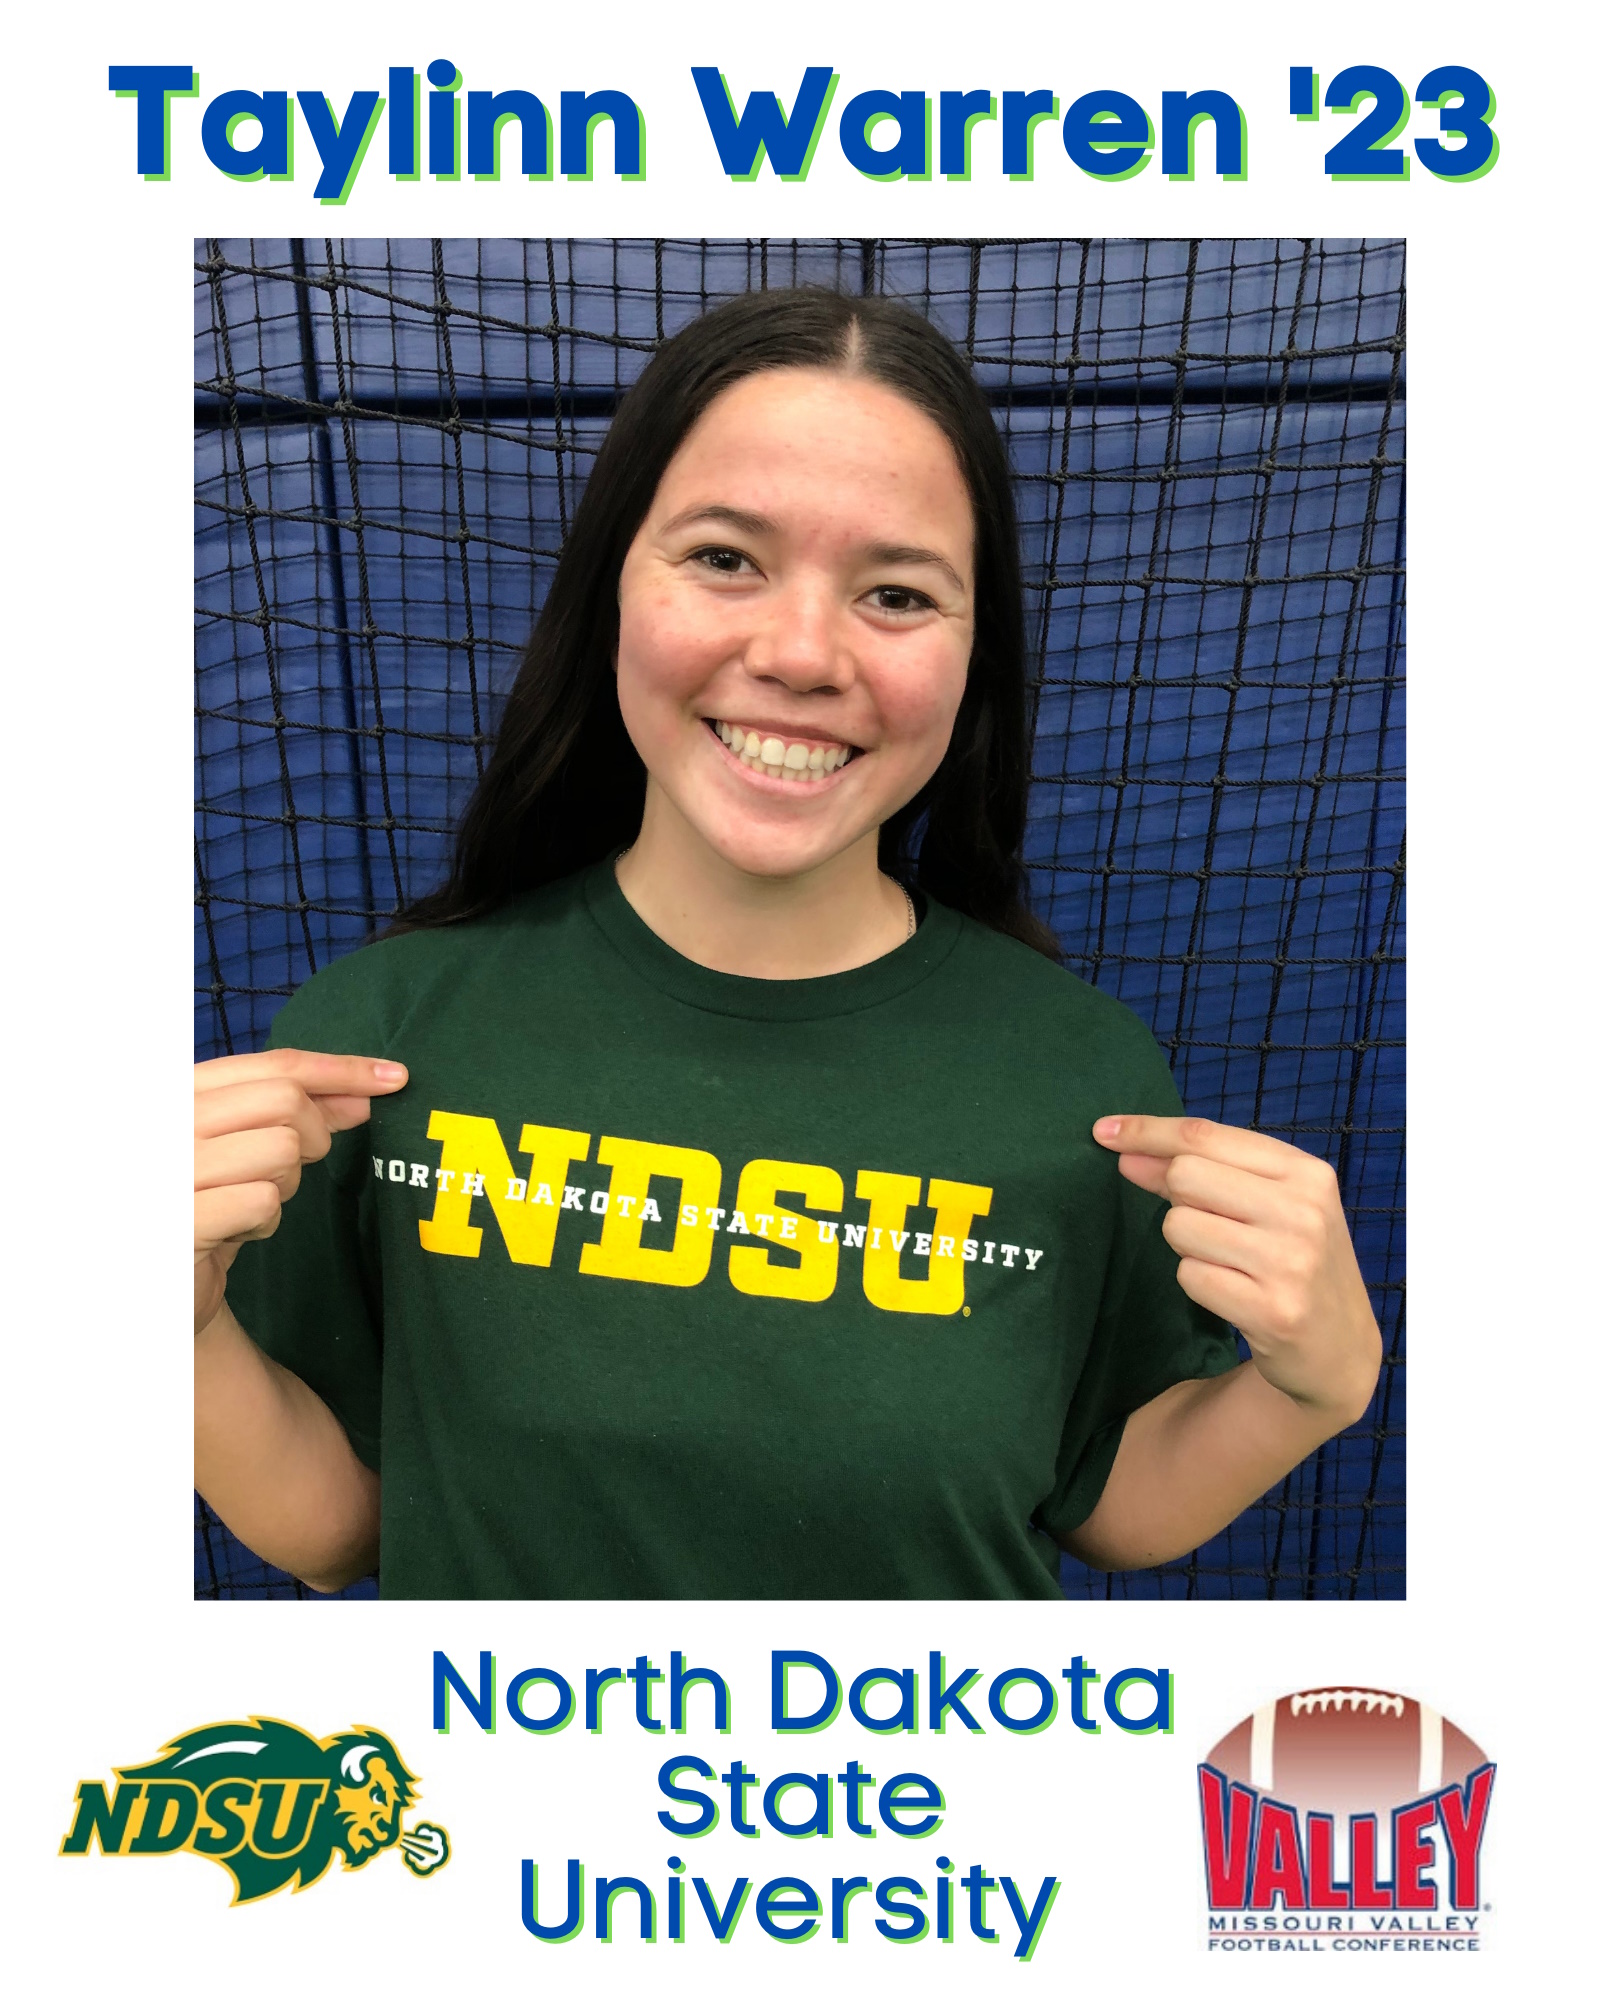 Taylinn Warren - North Dakota State University